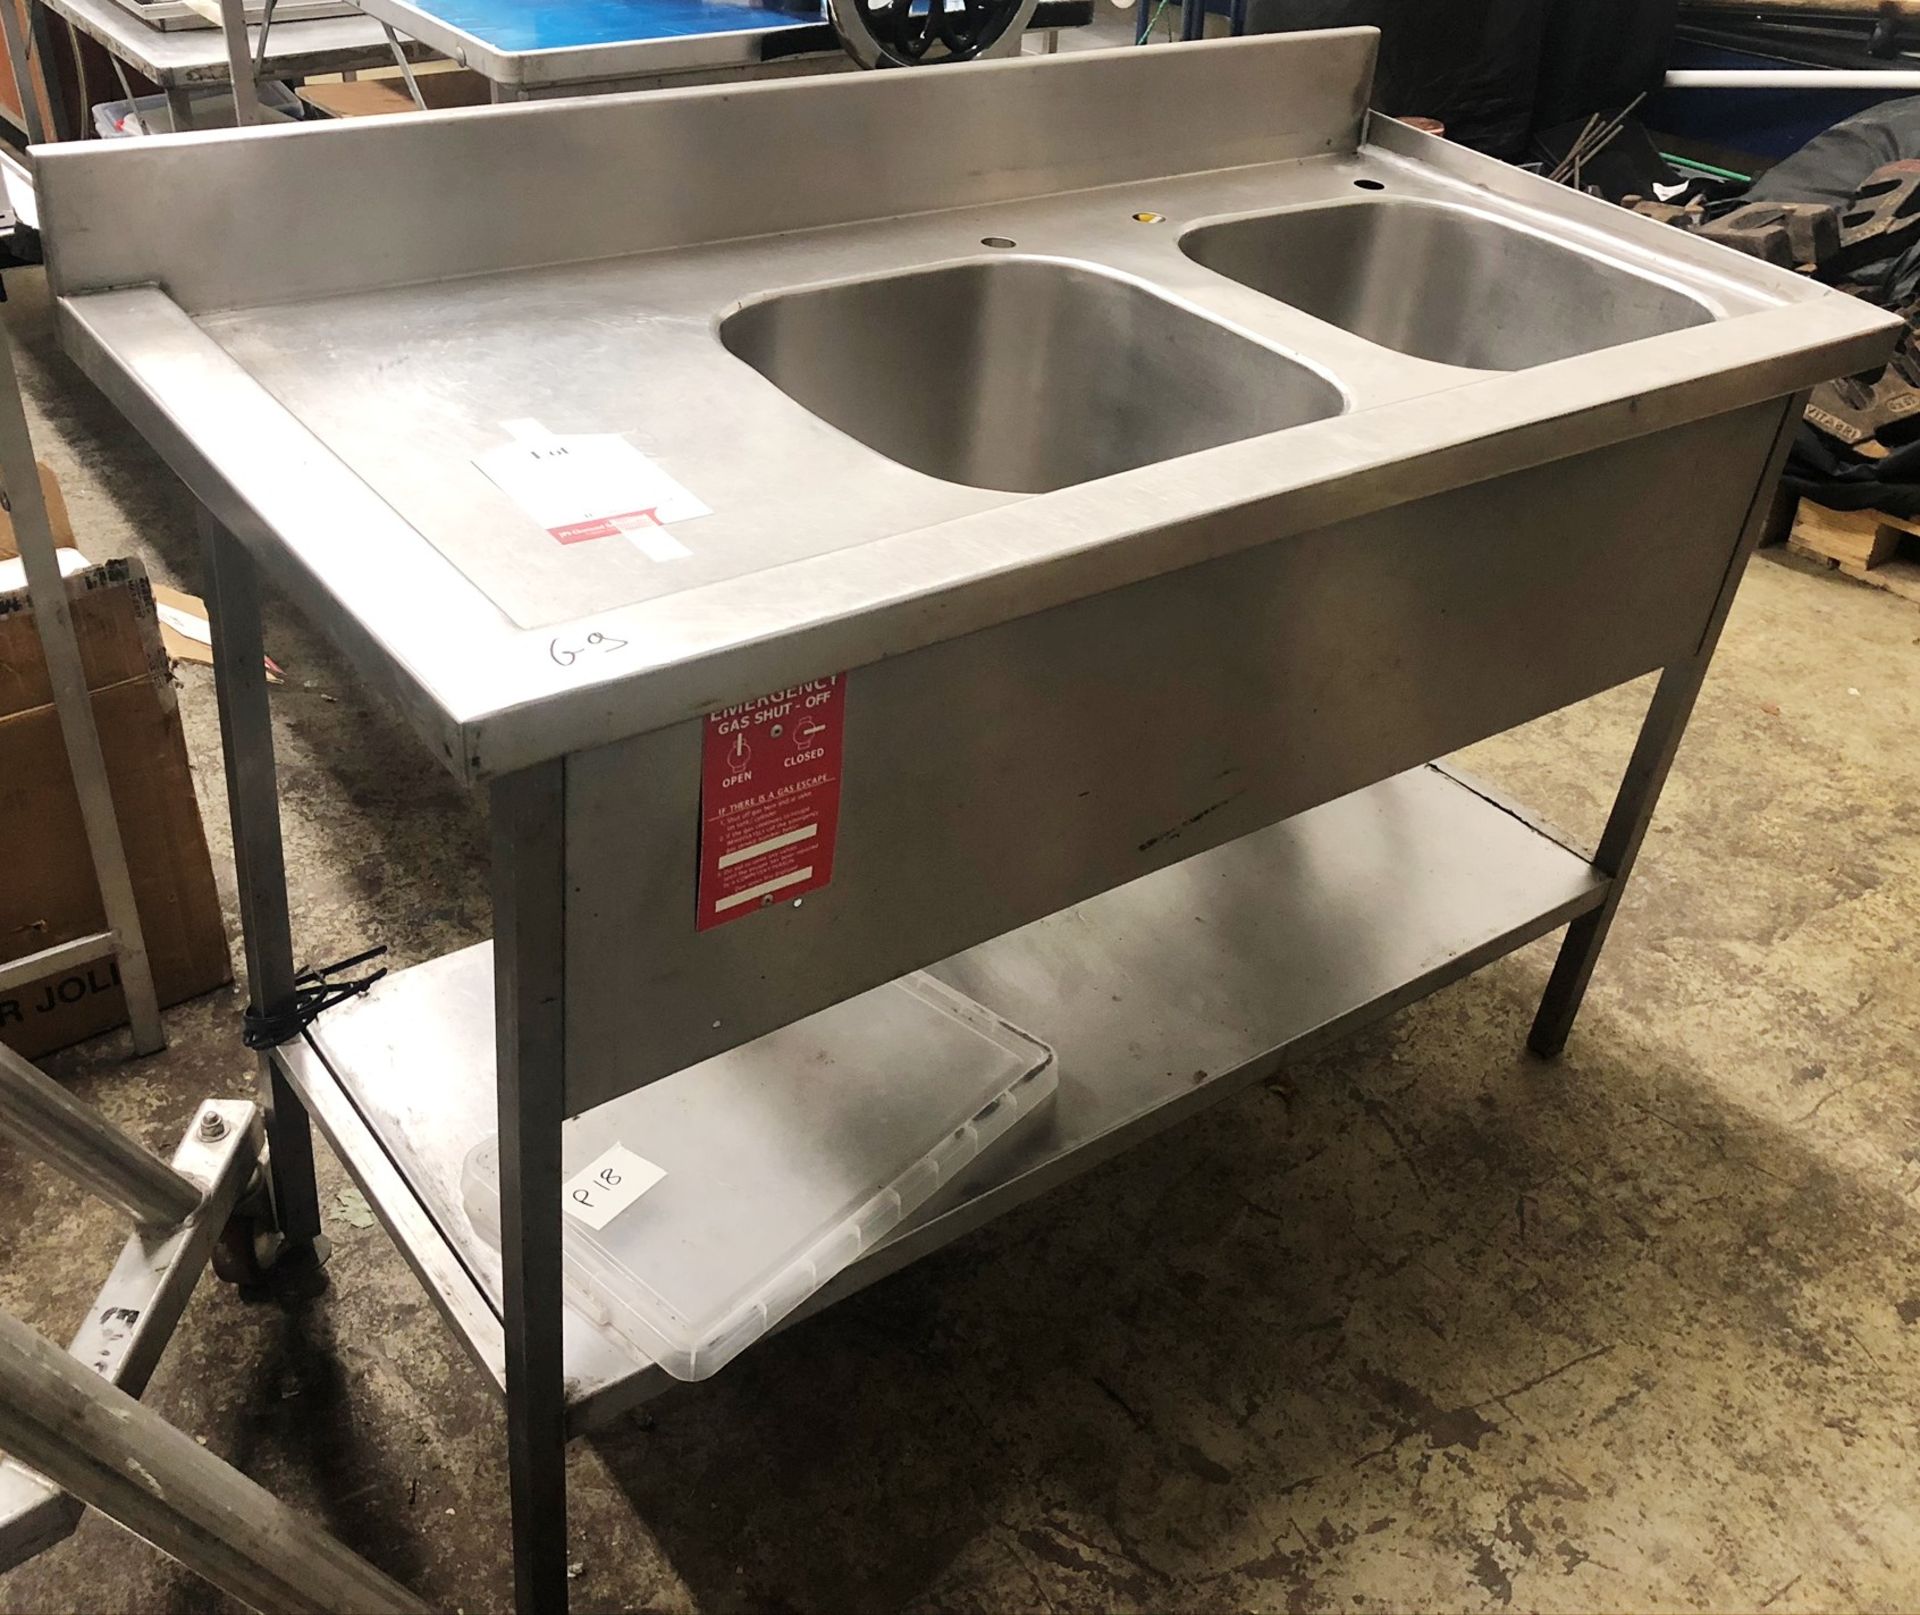 Stainless Steel Double Bowl Sink Unit w/ Undershelf & Backsplash | 135cm x 65cm x 90cm - Image 2 of 3